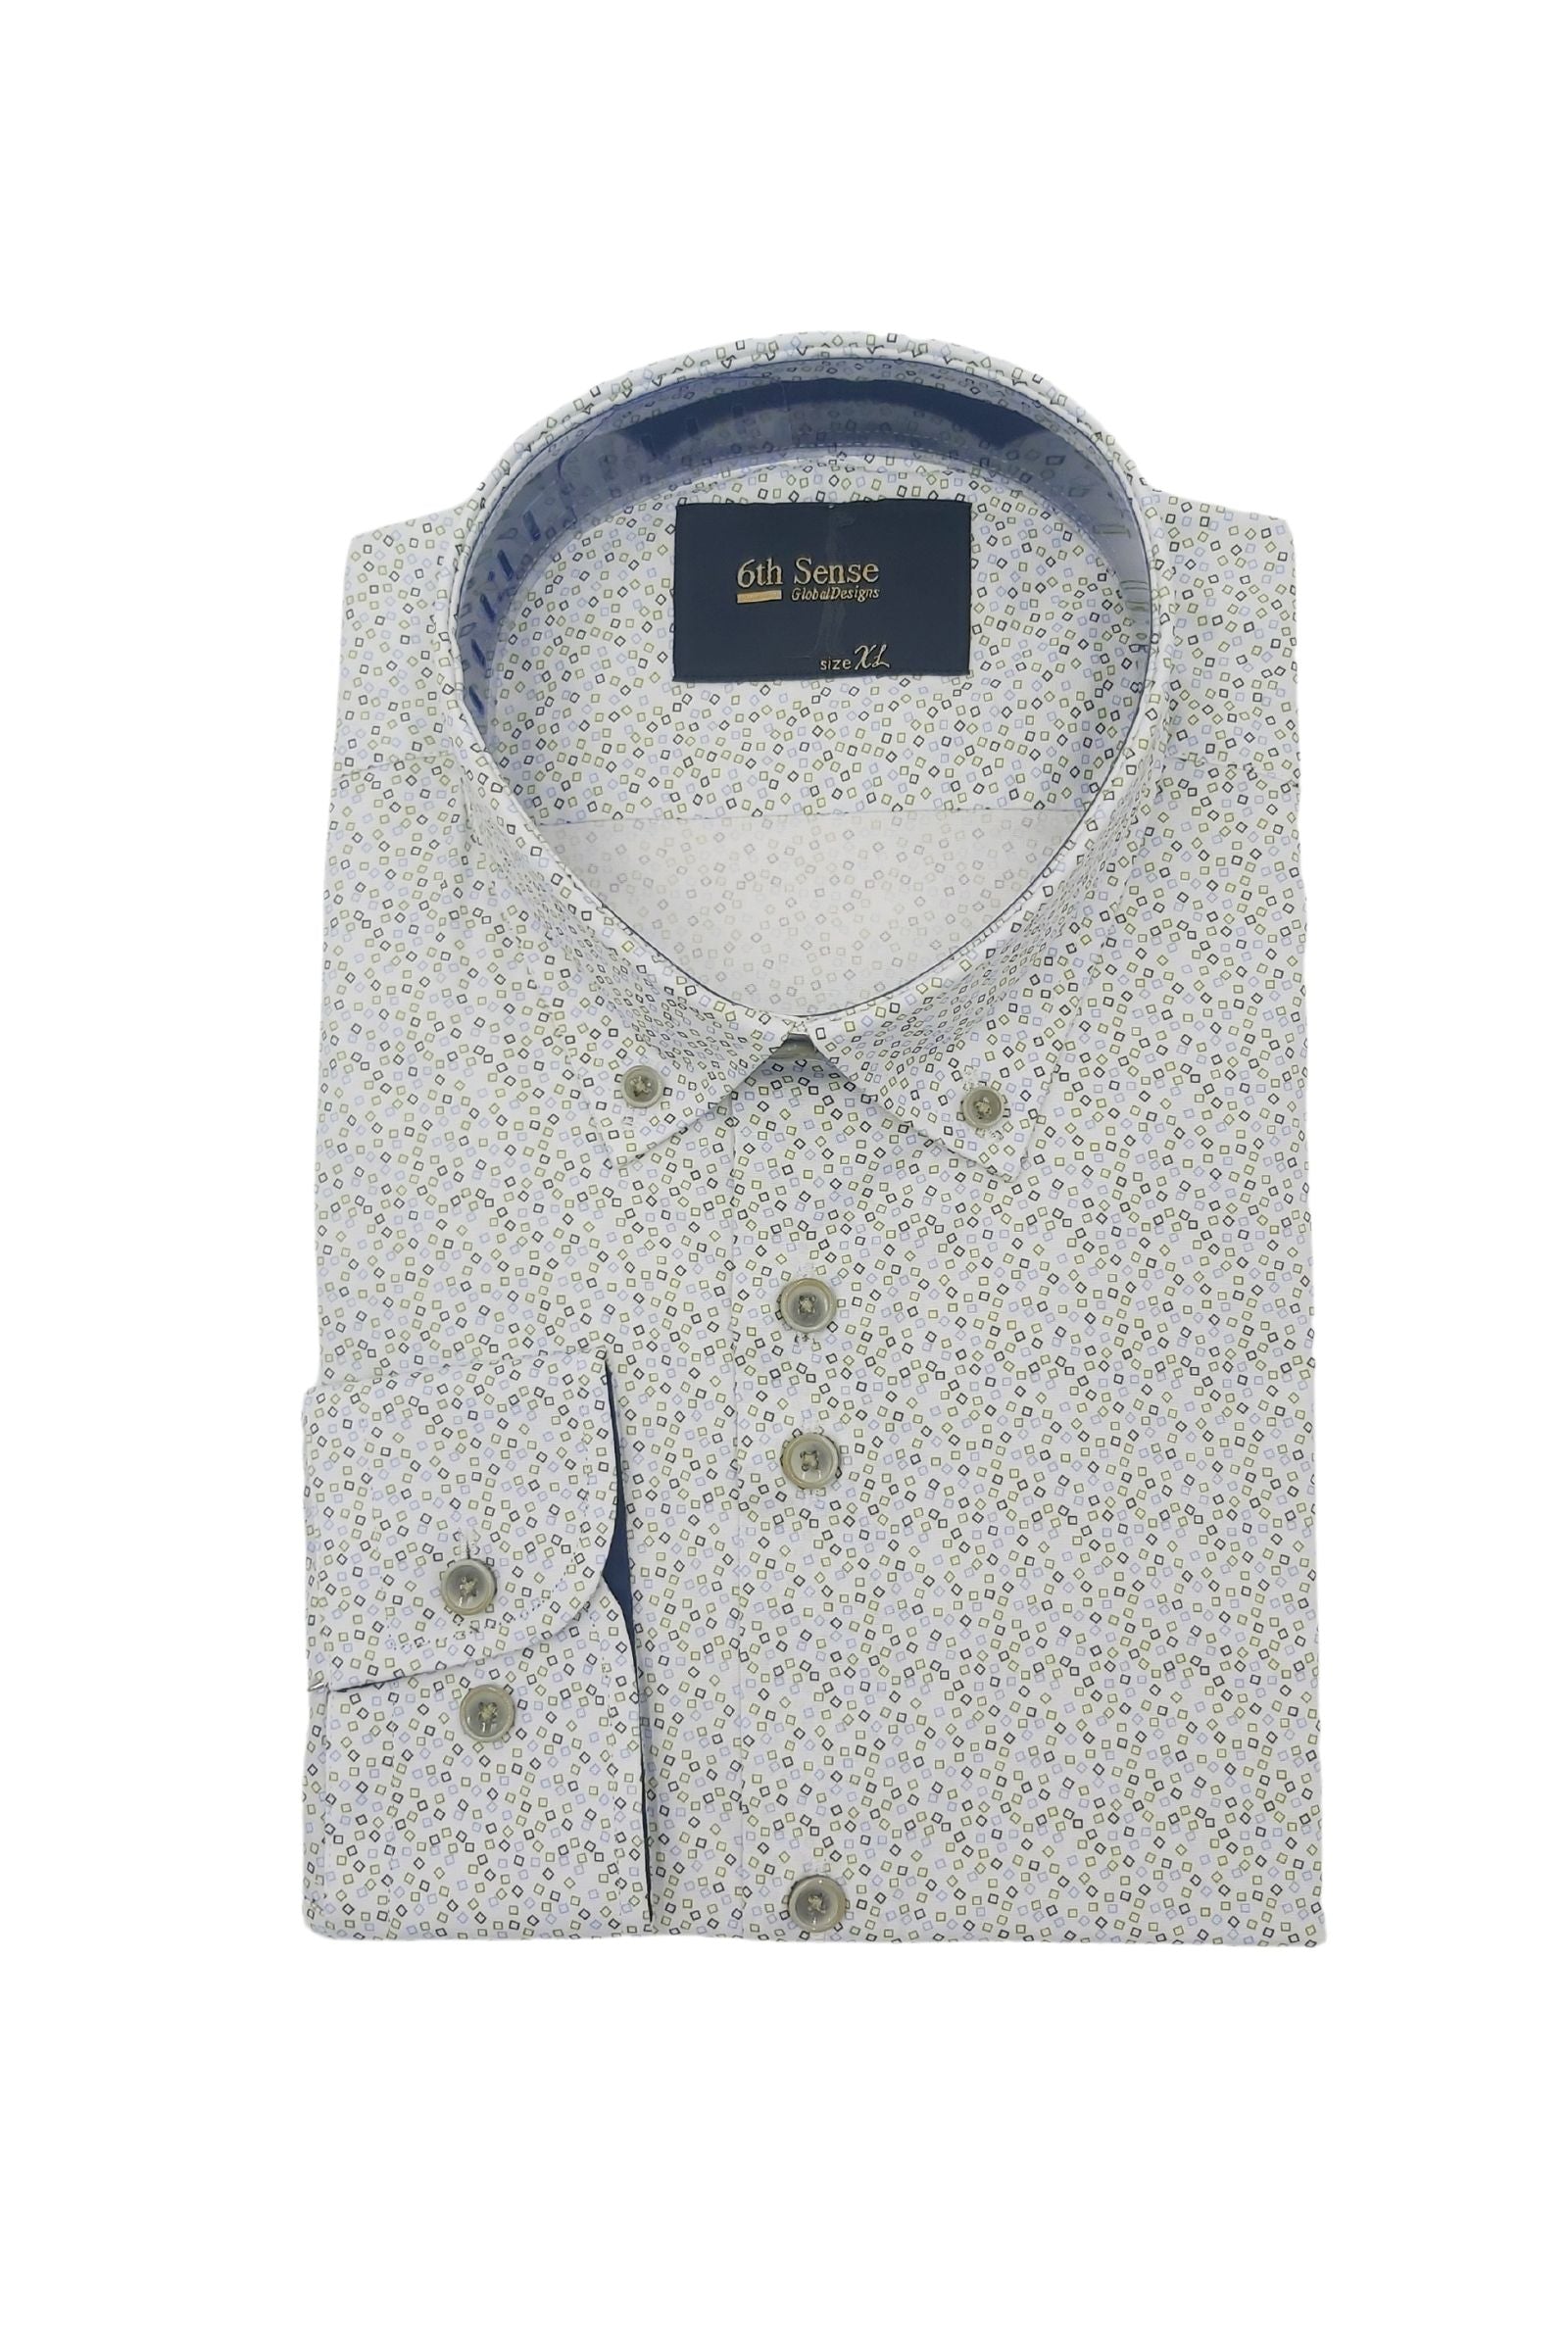 Men's Button Down Green/Blue Square Print Shirt-Front View